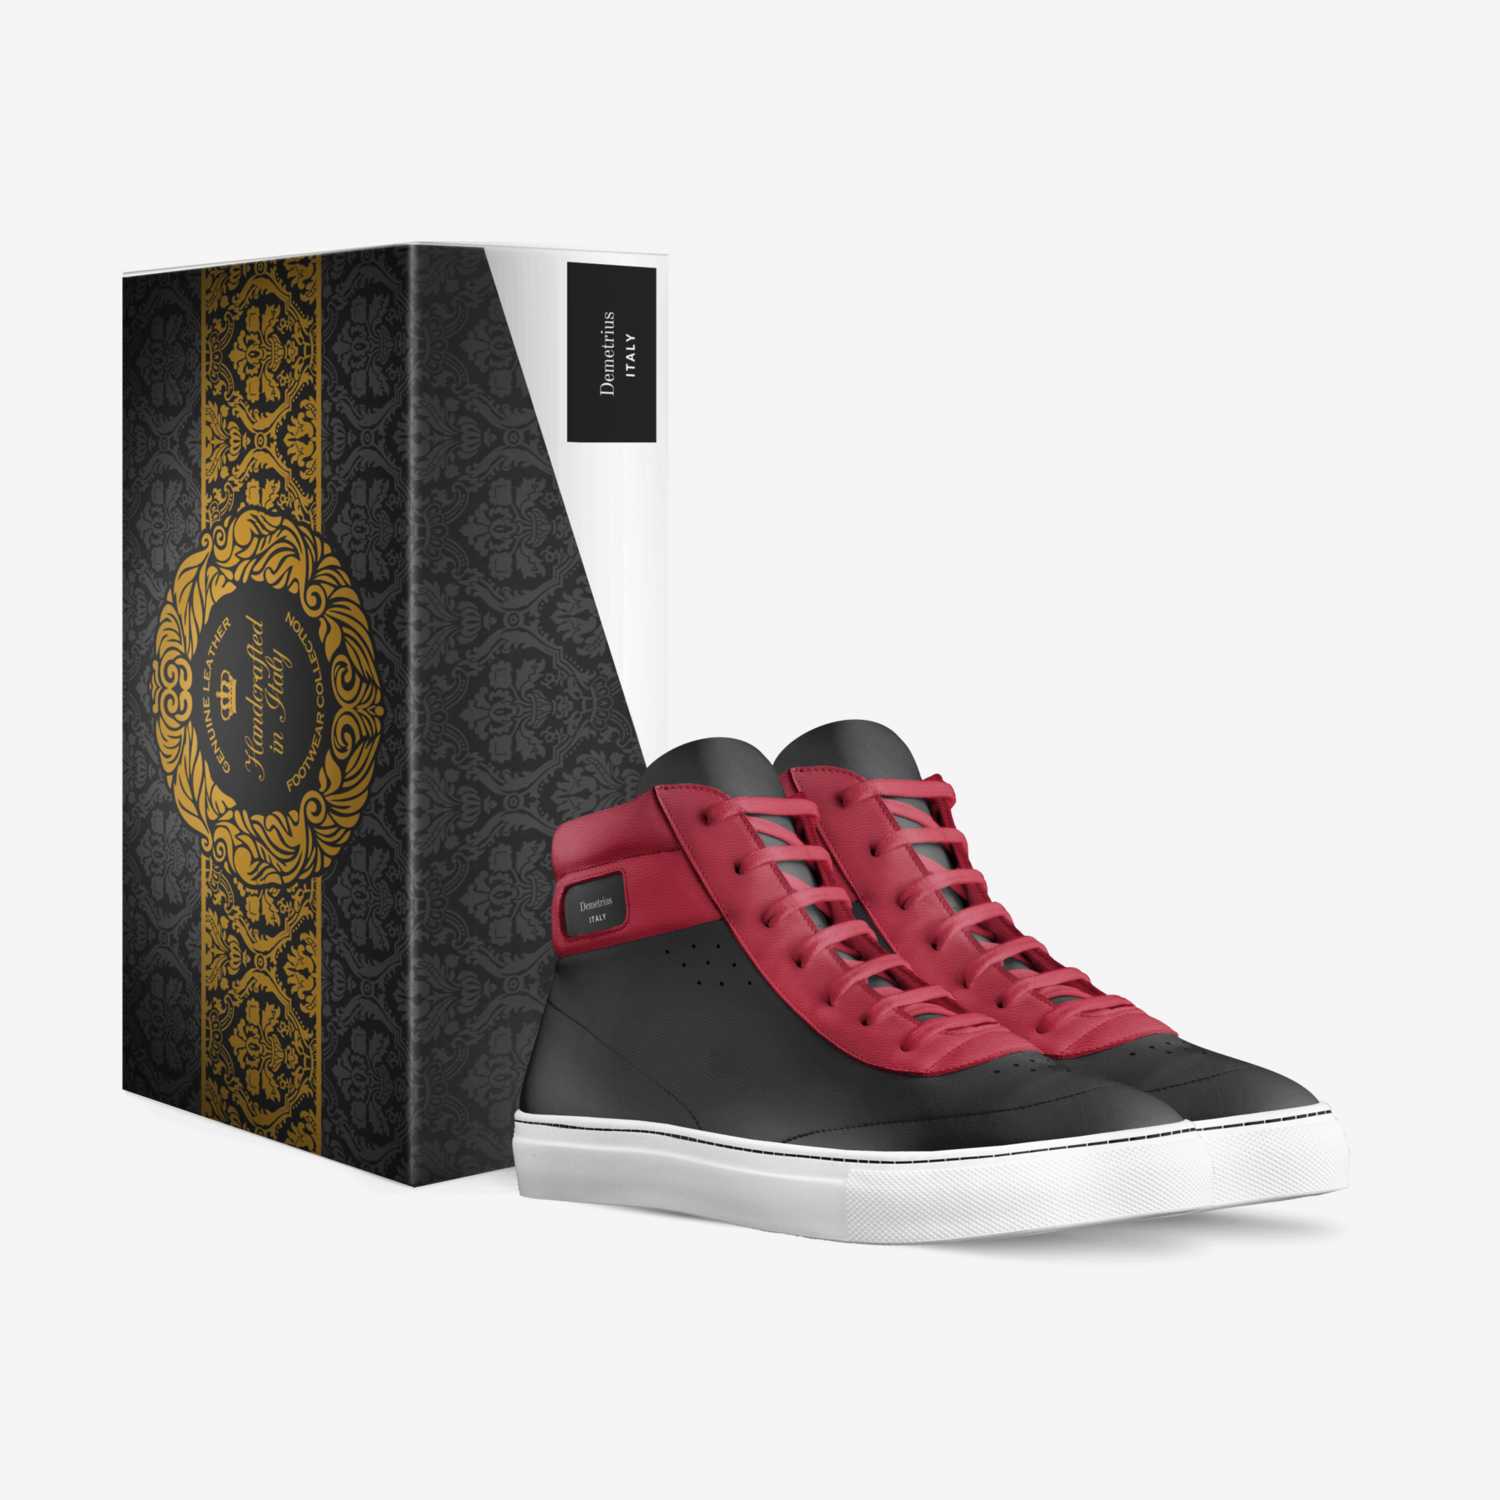 Demetrius custom made in Italy shoes by Nicholas Silva | Box view